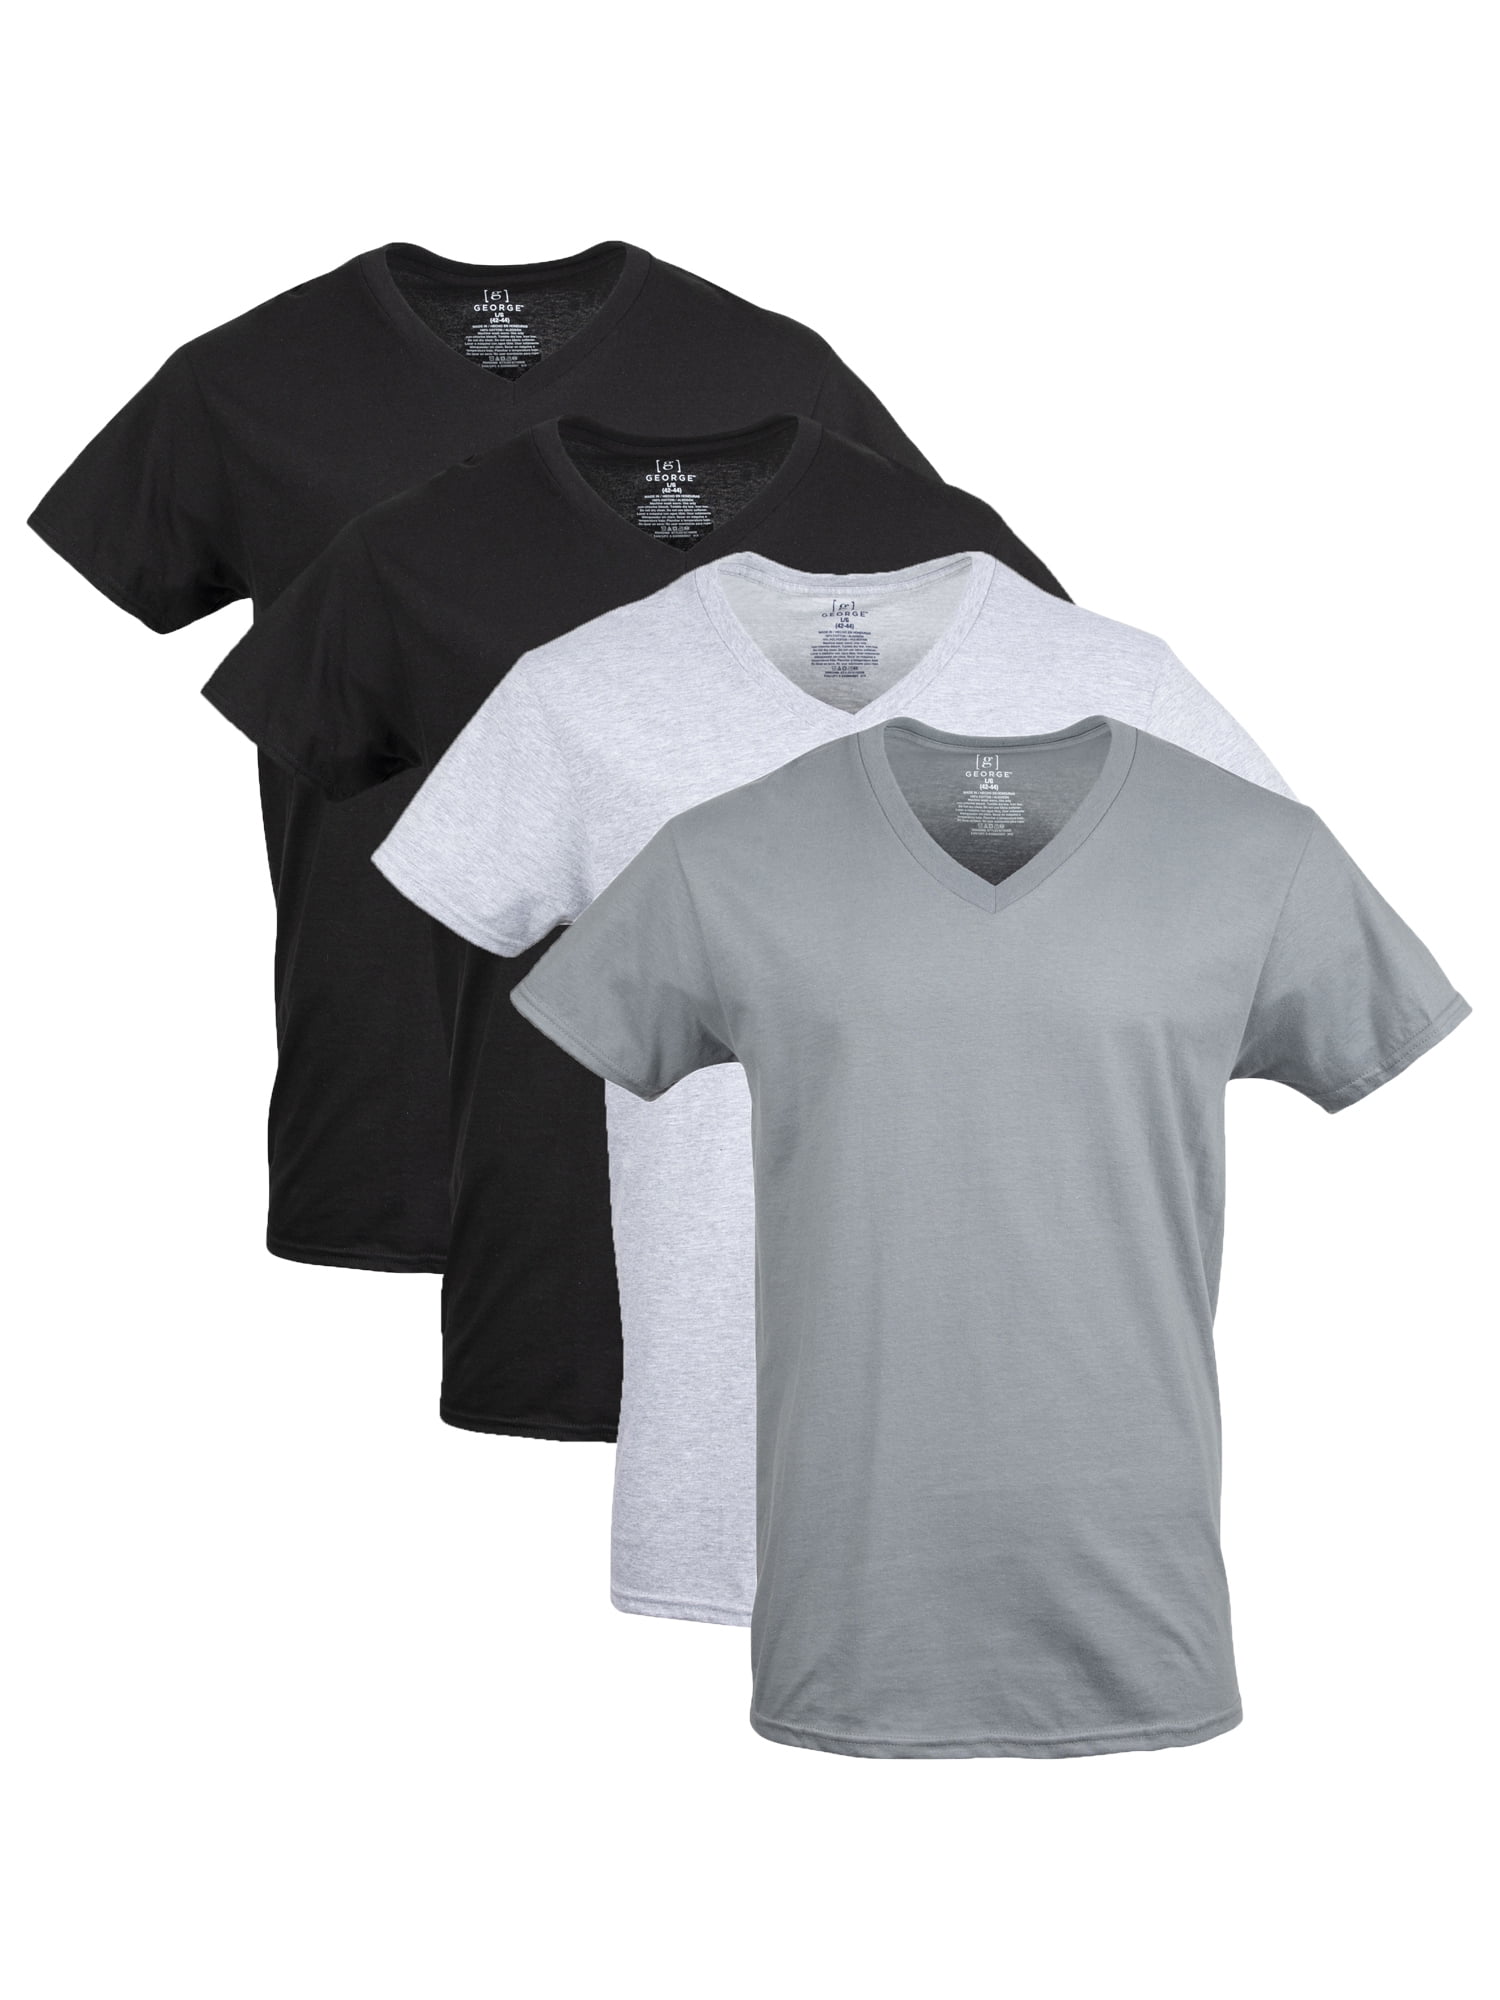 George Big Men's V-Neck T-shirts, 4-Pack - Walmart.com